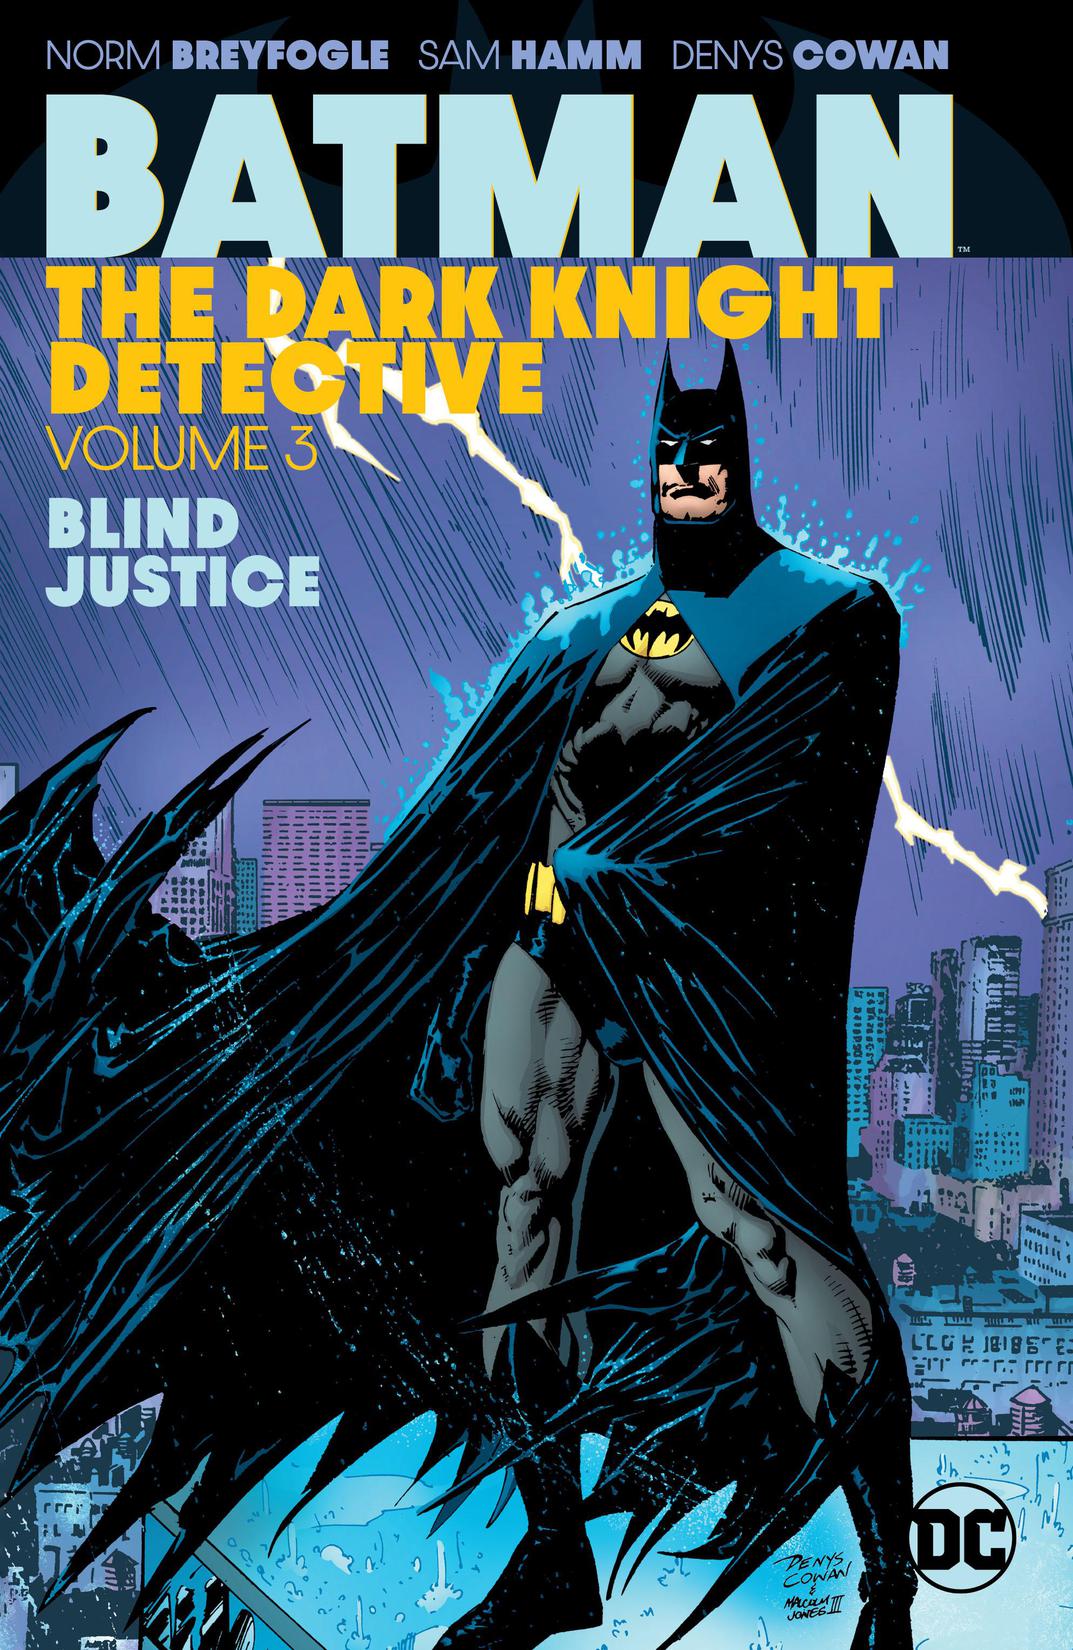 Batman: The Dark Knight Detective Vol. 3 preview images